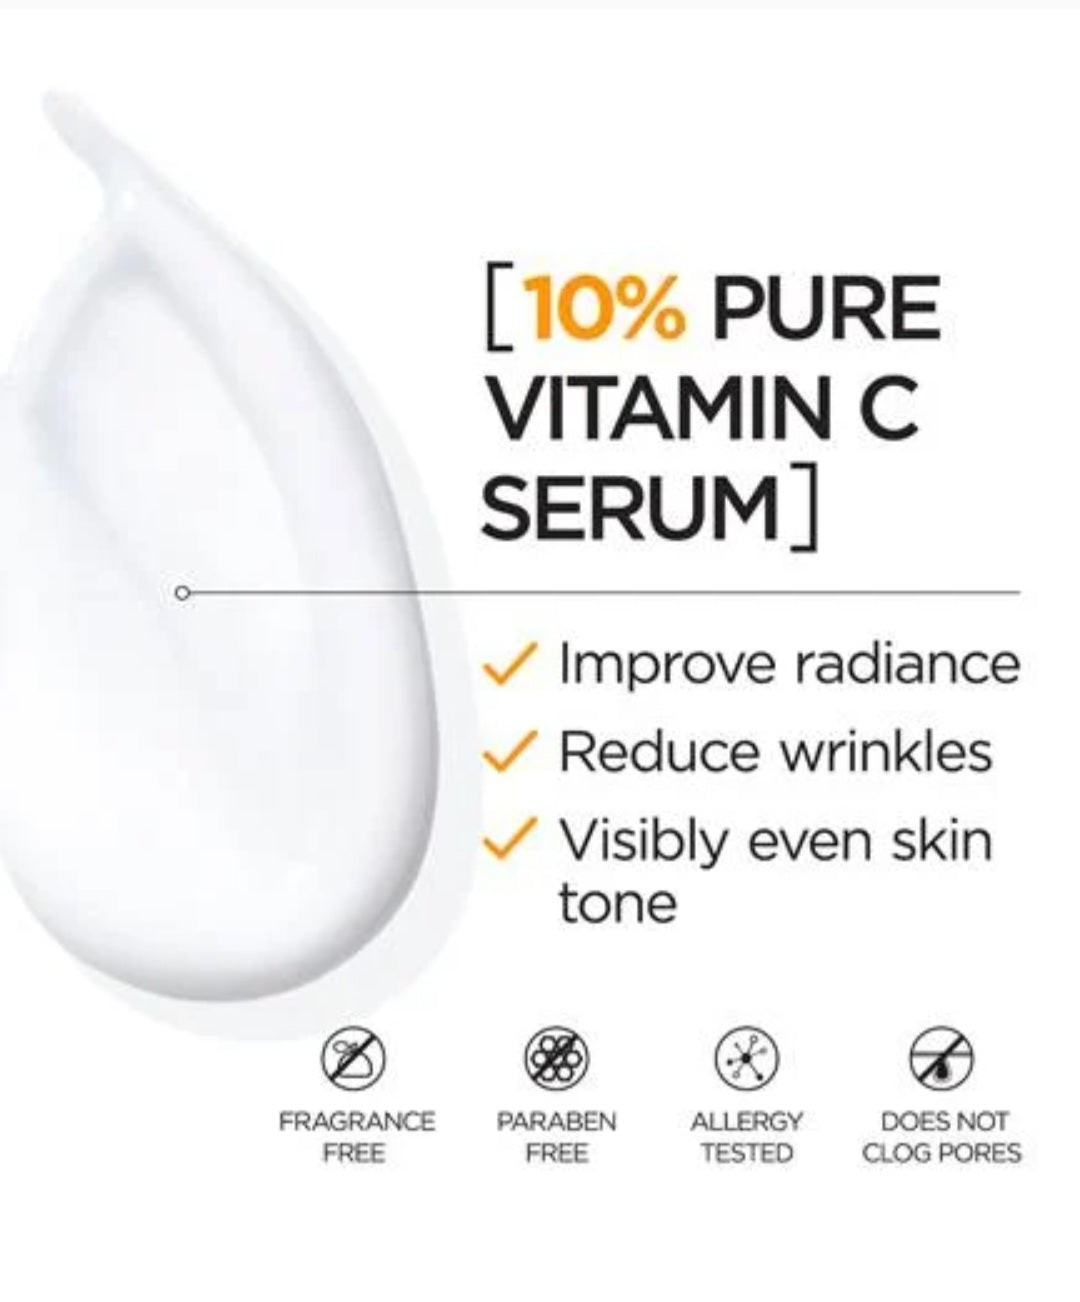 L'oreal REVITALIFT
10% Pure Vitamin C Serum